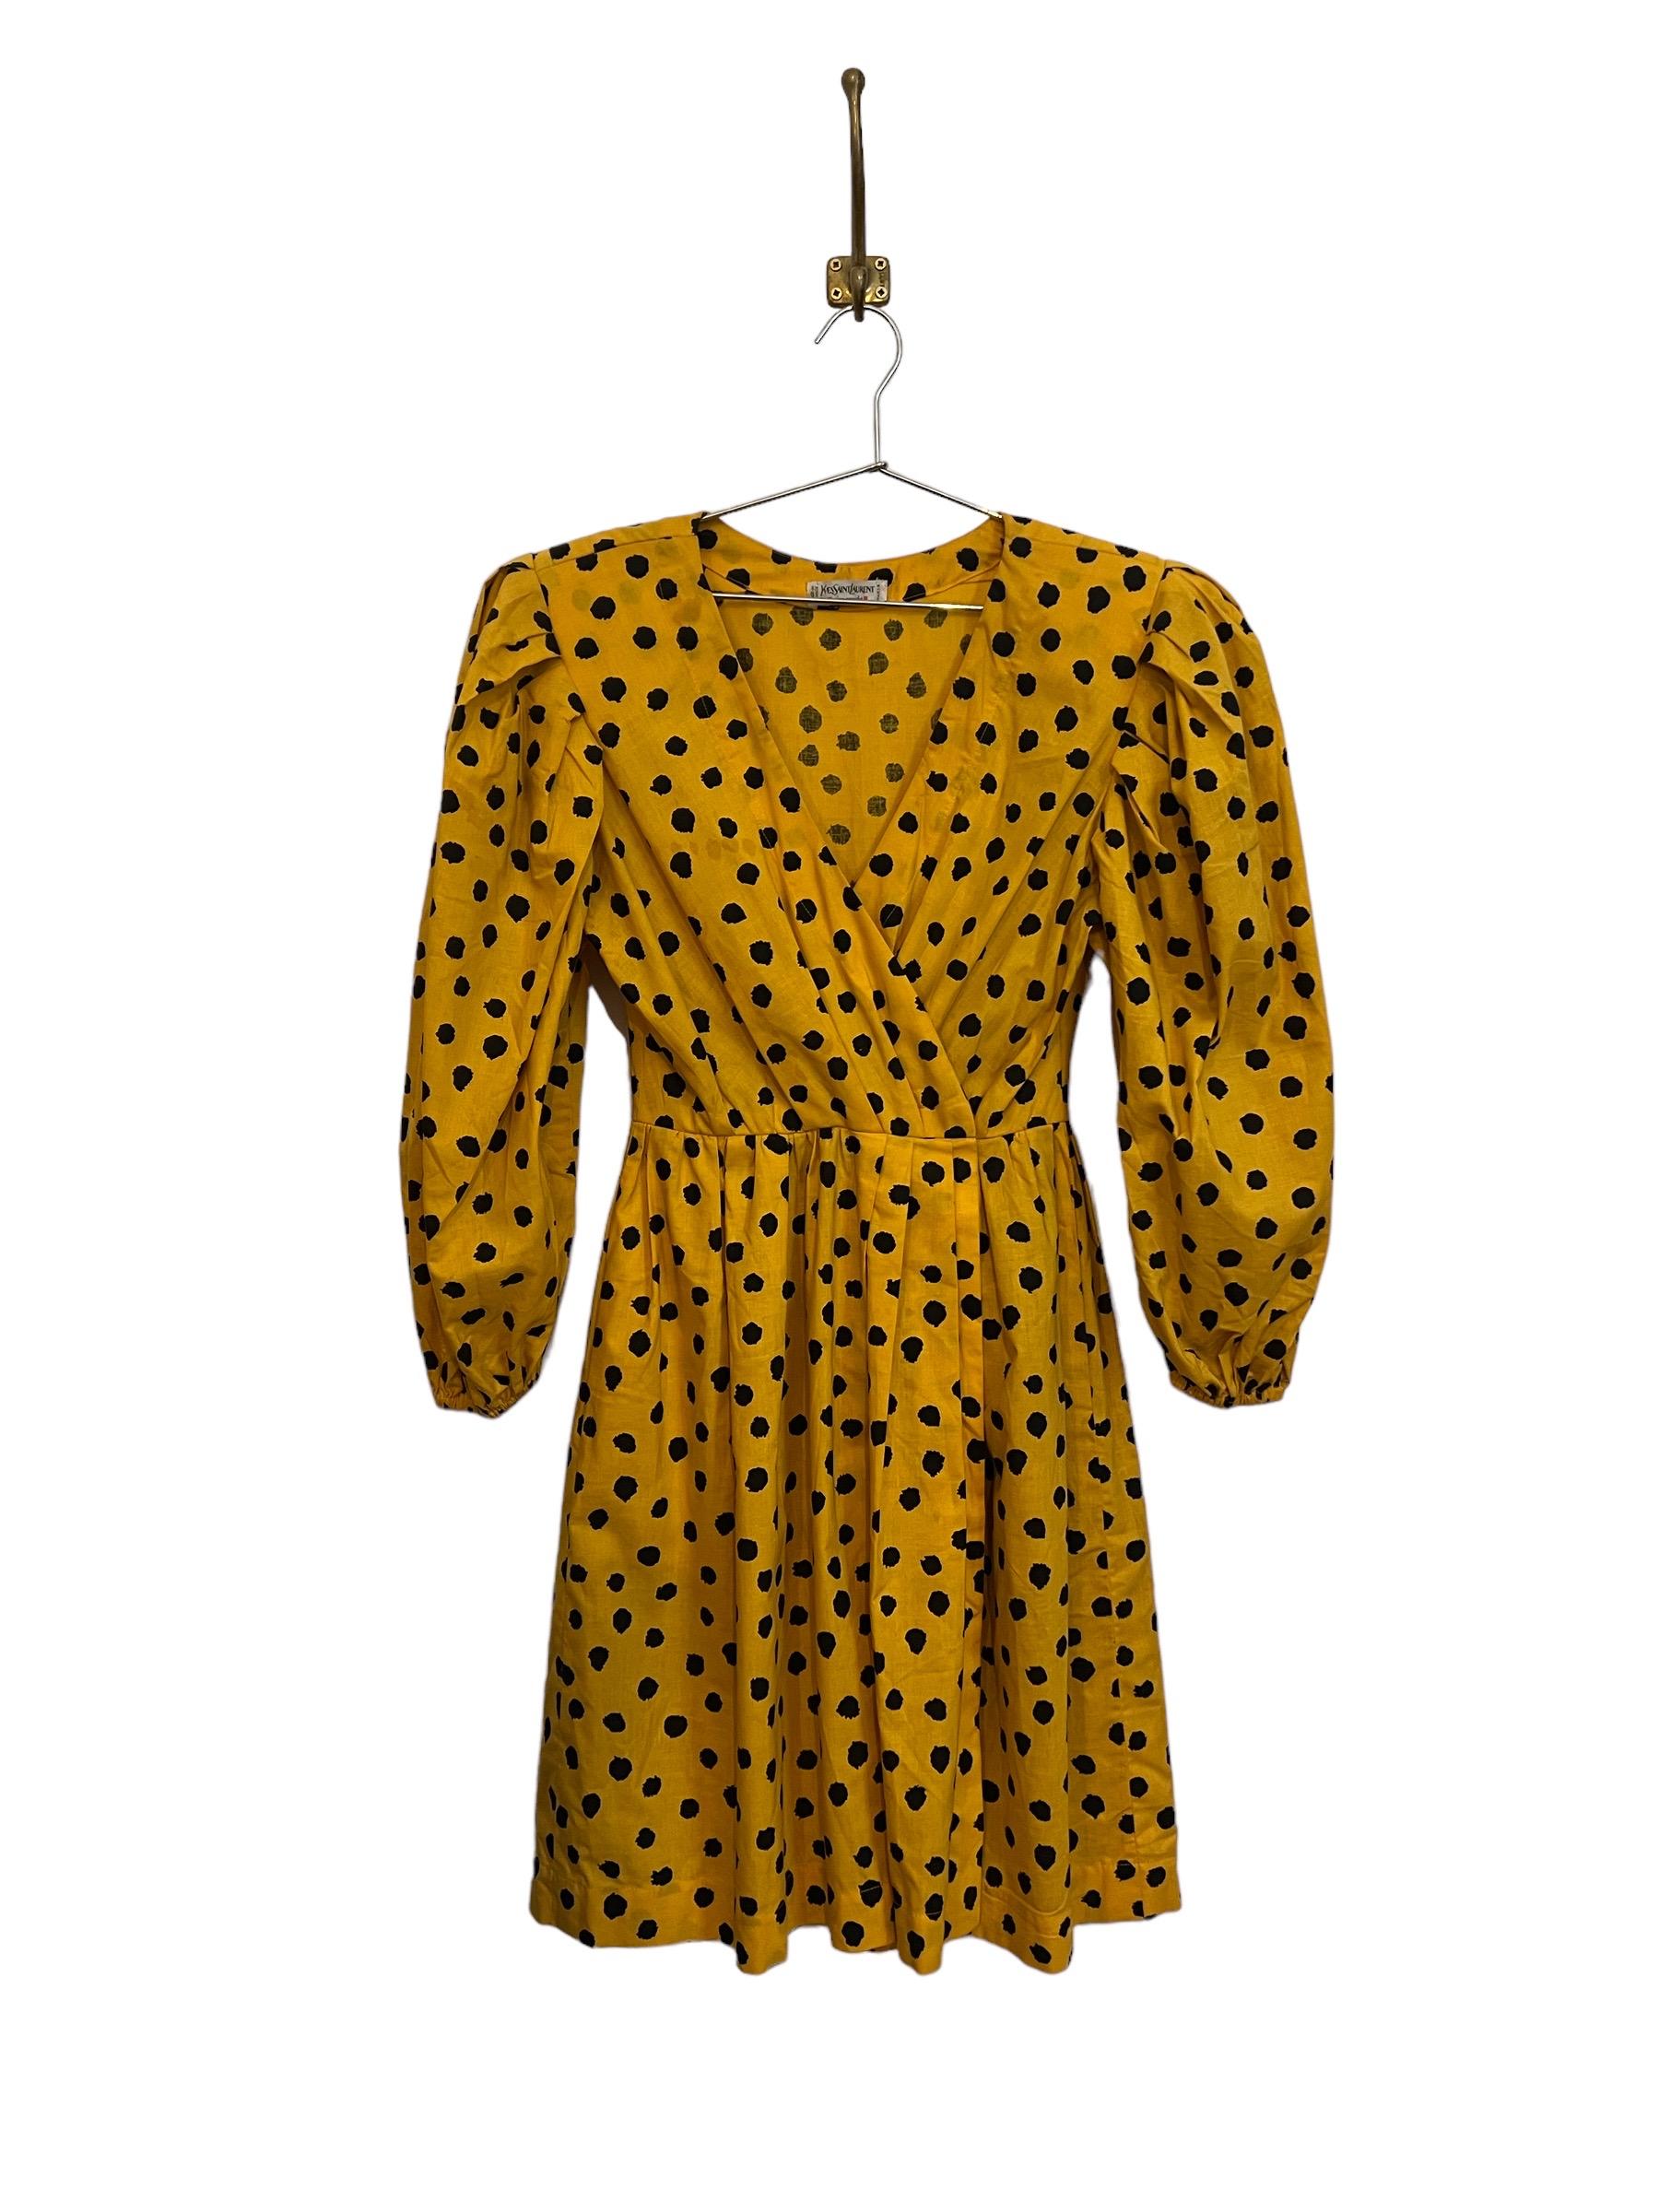 Vintage Yves Saint Laurent Yellow and Black Cotton Polka Dot Dress 1